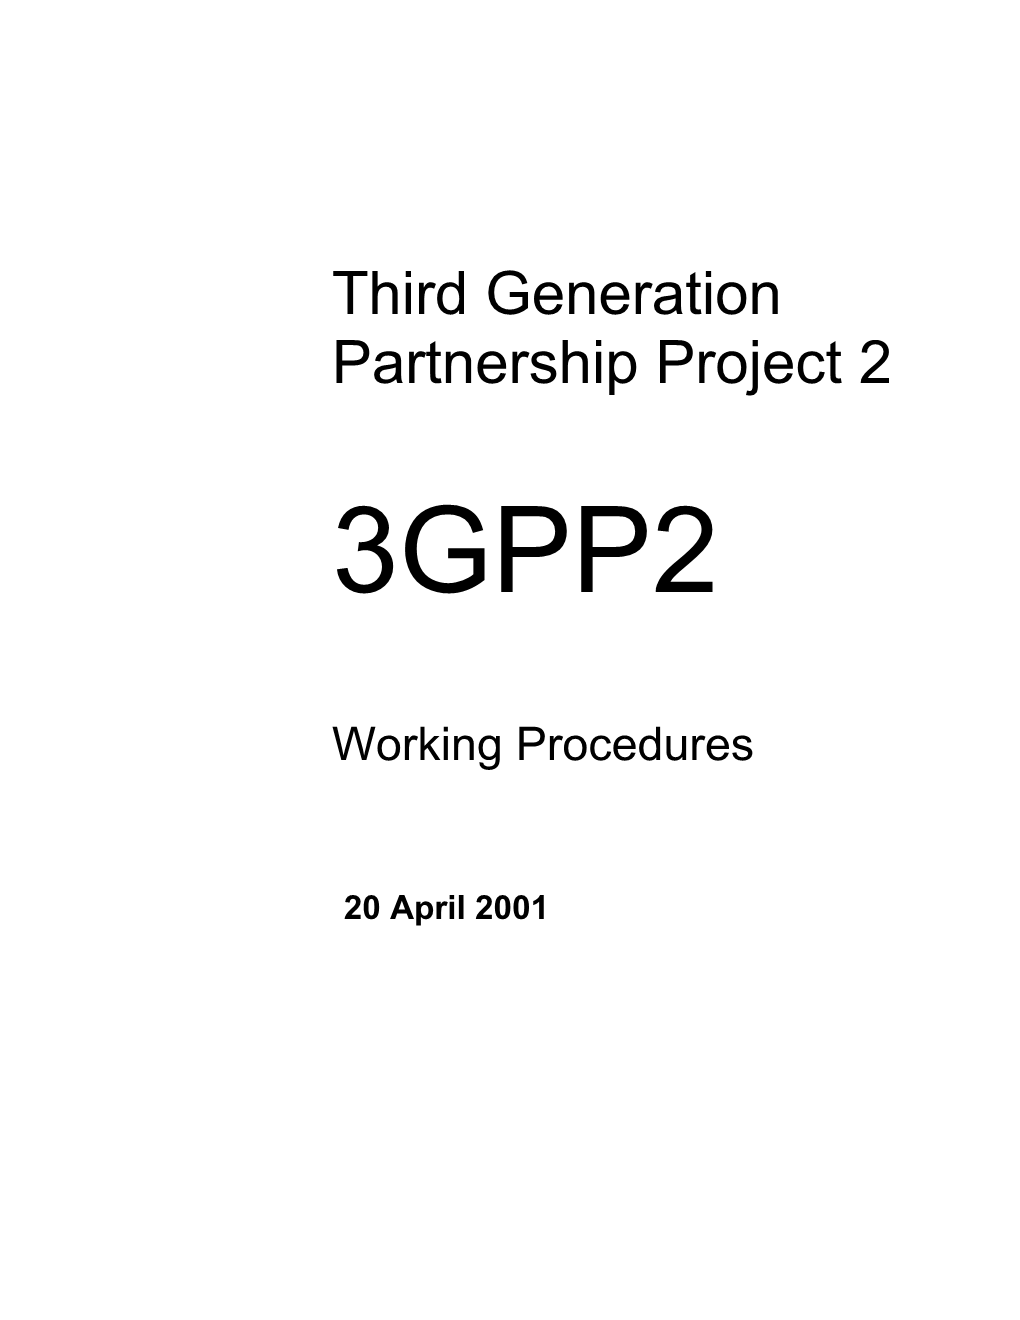 Third Generation Partnership Project 2